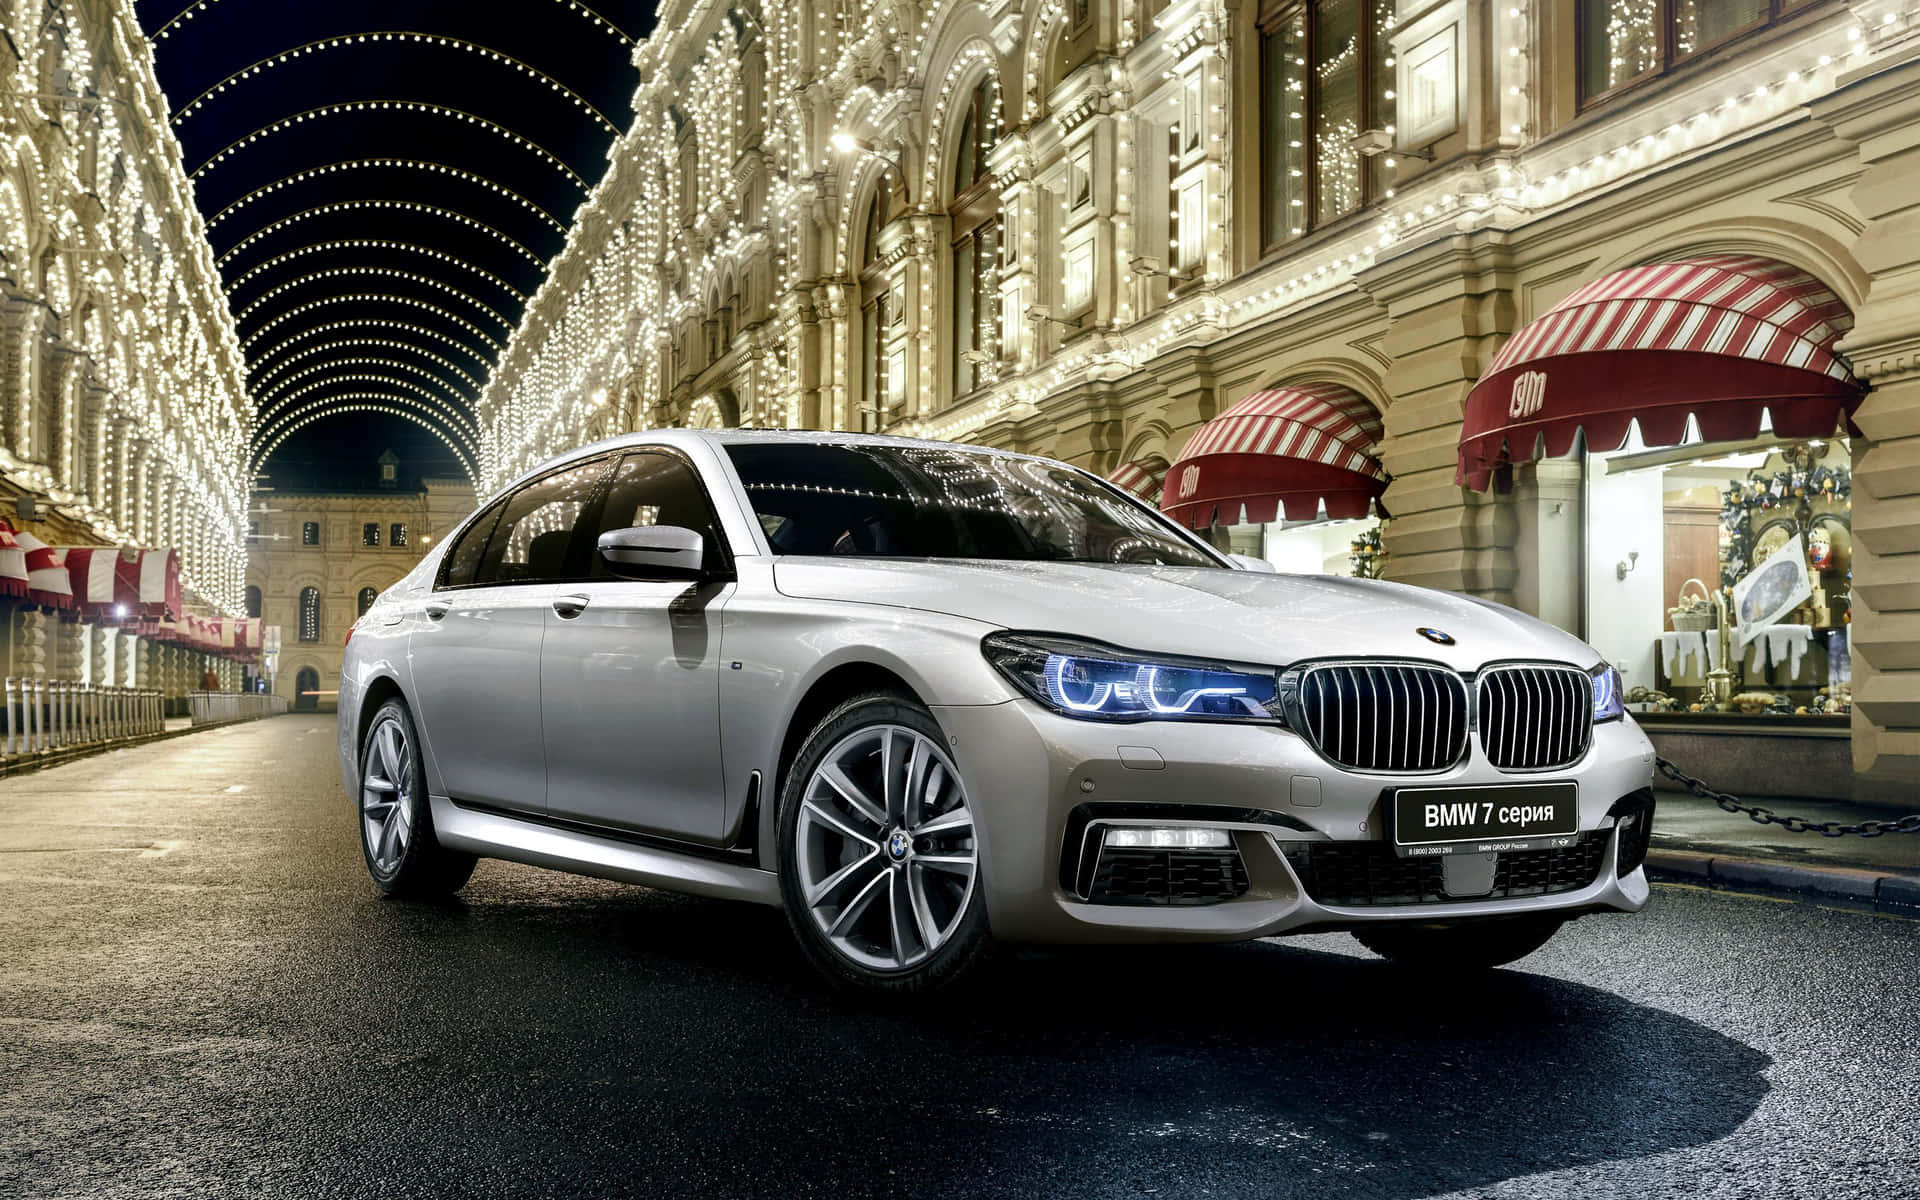 Stunning BMW 7 Series in Action Wallpaper